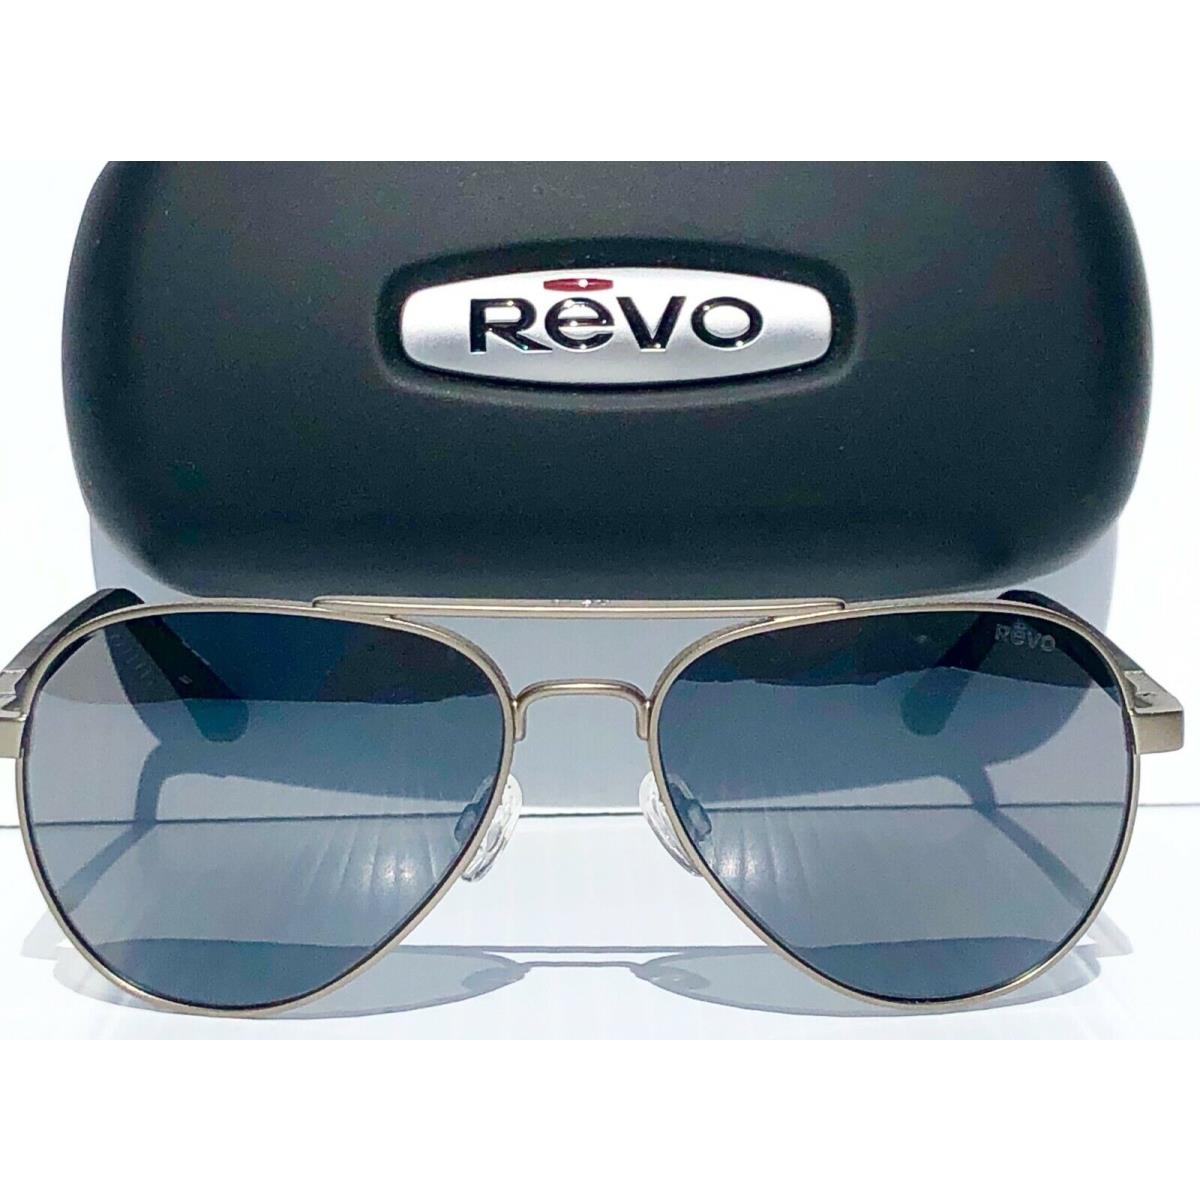 Revo sunglasses Raconteur - Silver Frame, Gray Lens